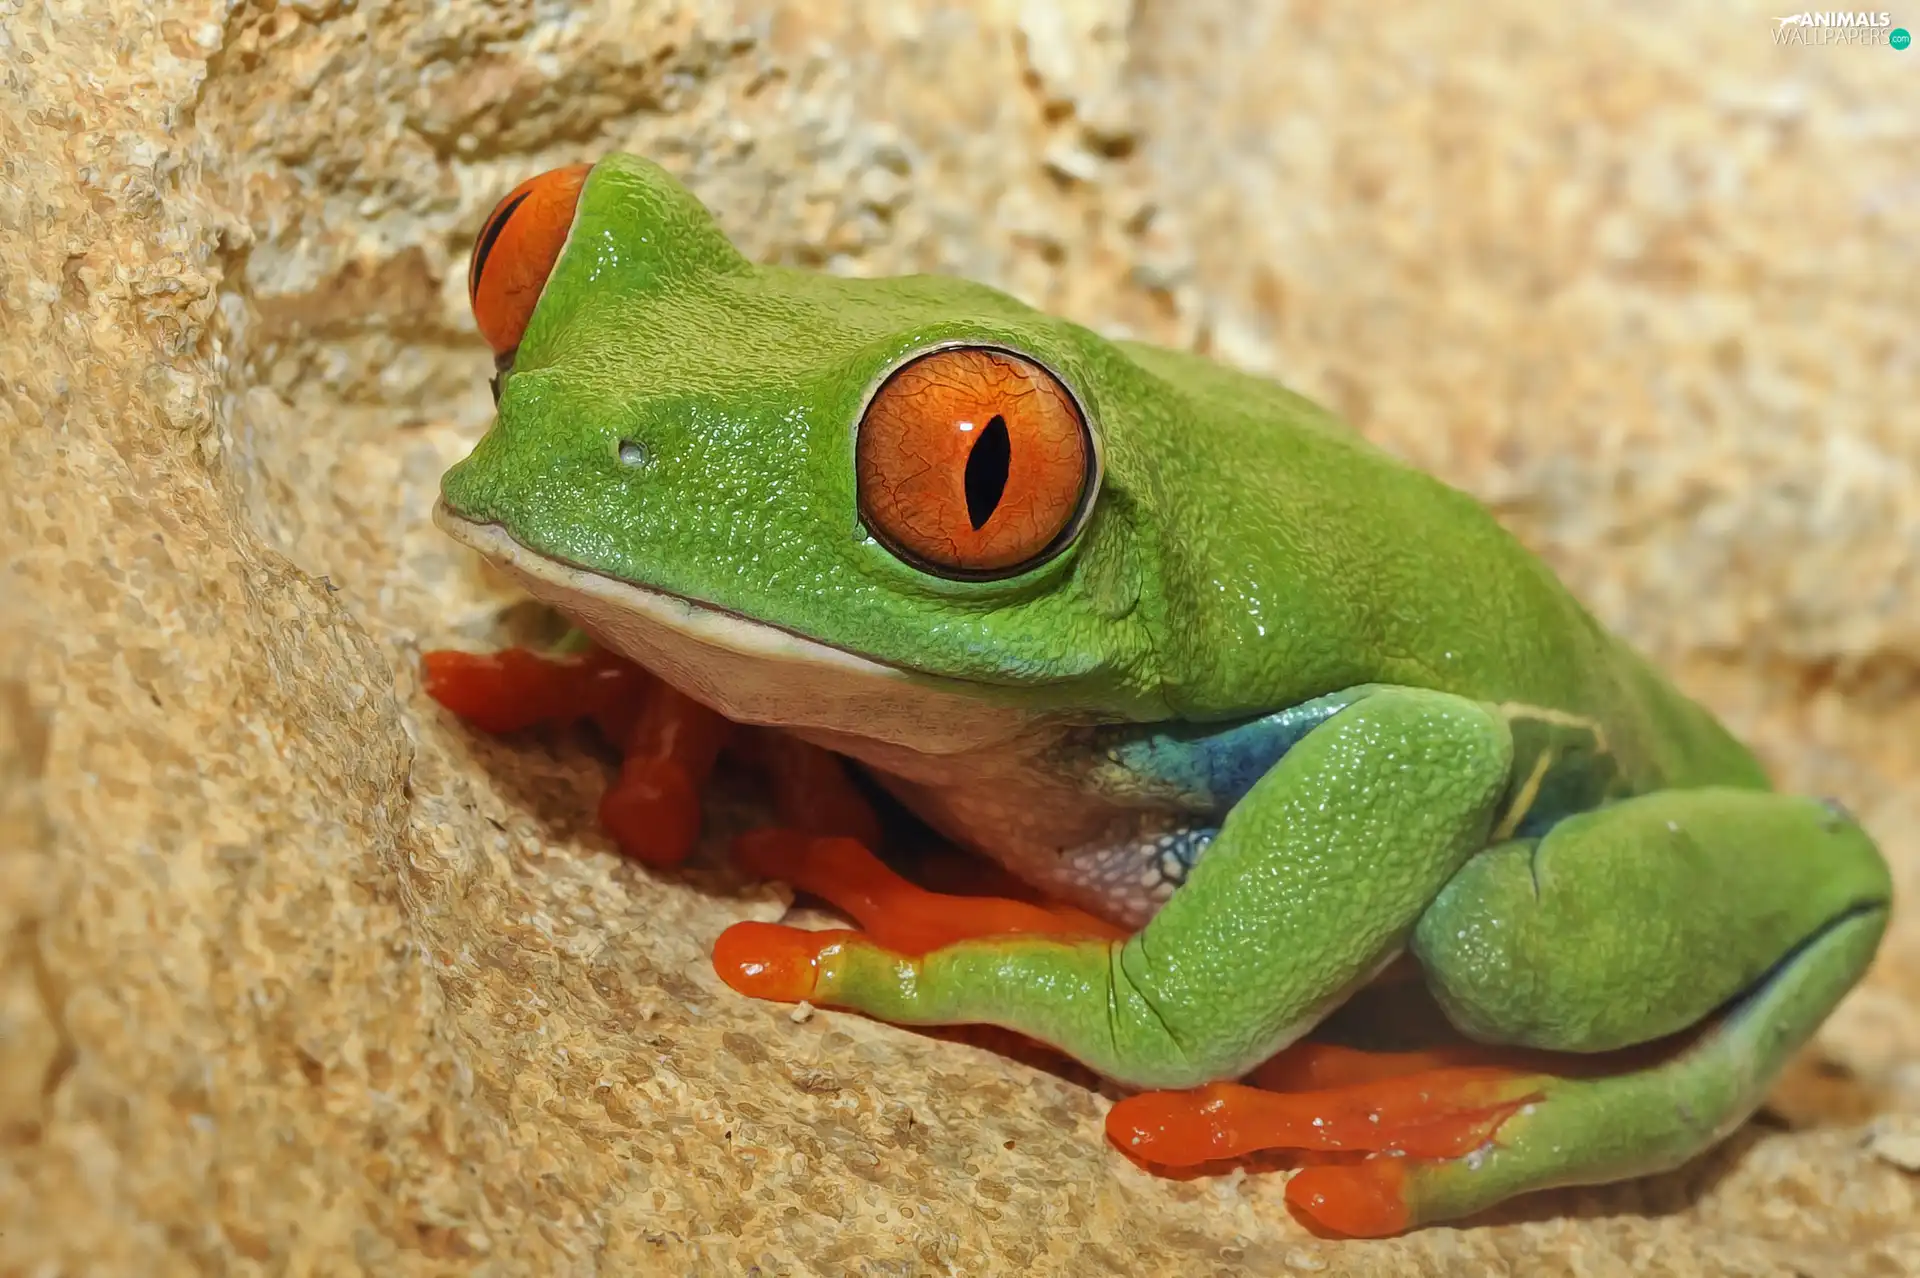 Red eyed tree frog, Green, strange frog